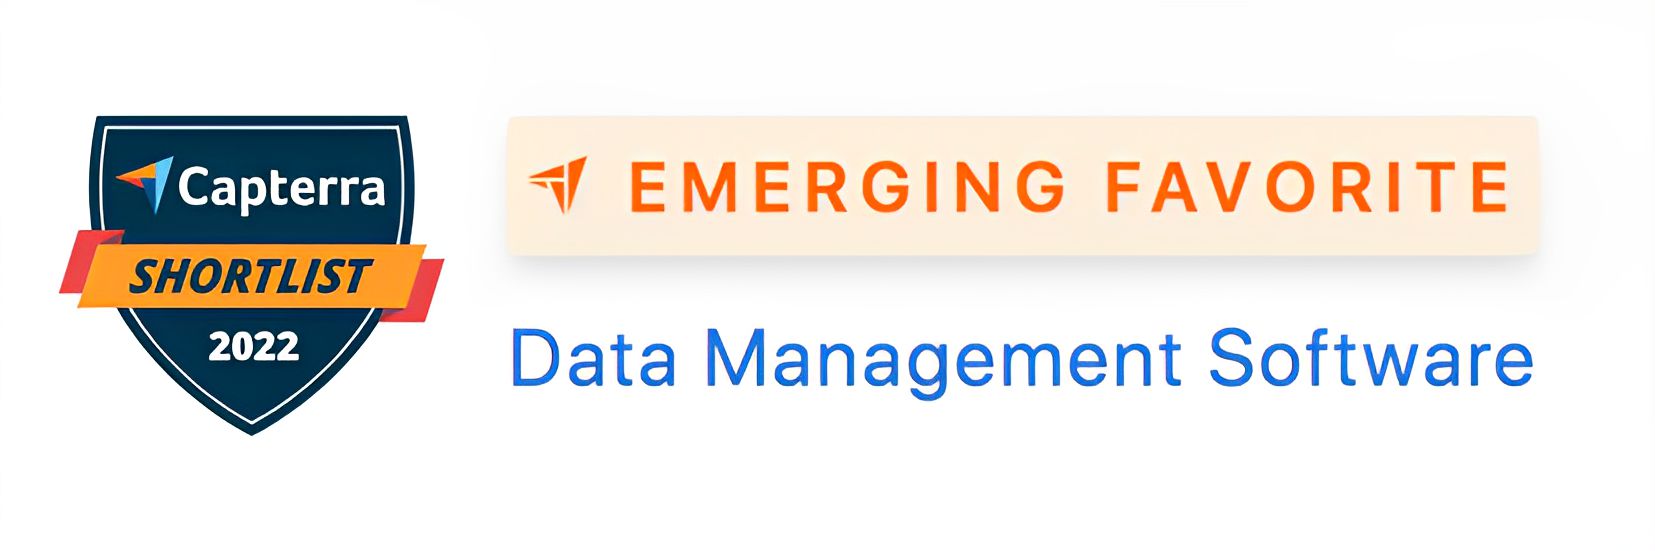 Capterra Shortlist 2022 Data Management Software